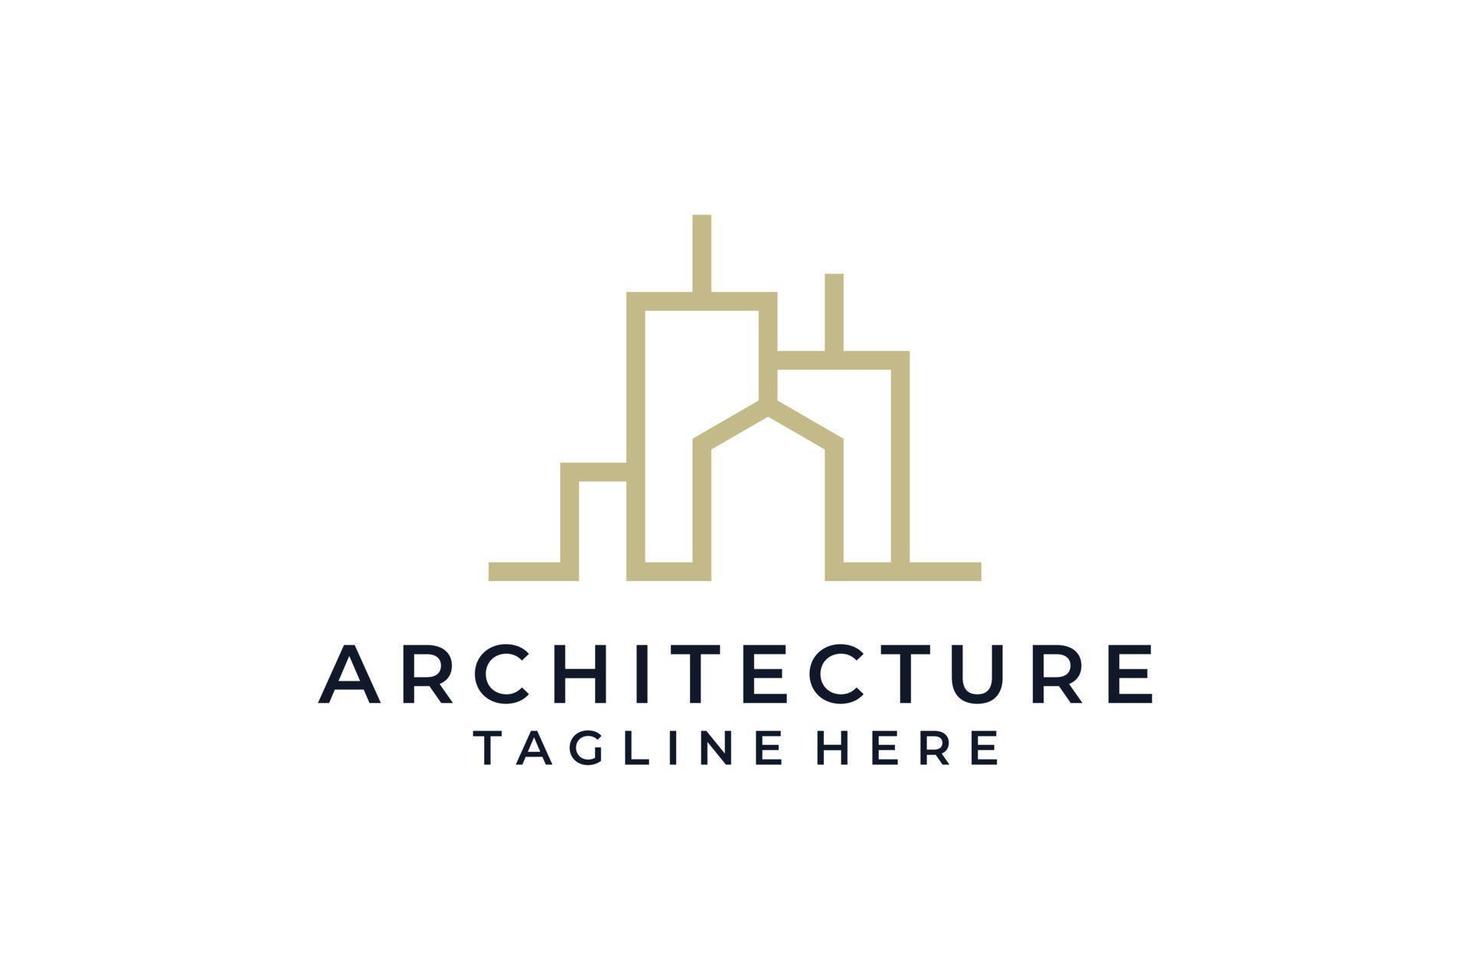 Construction architecture building logo design vector